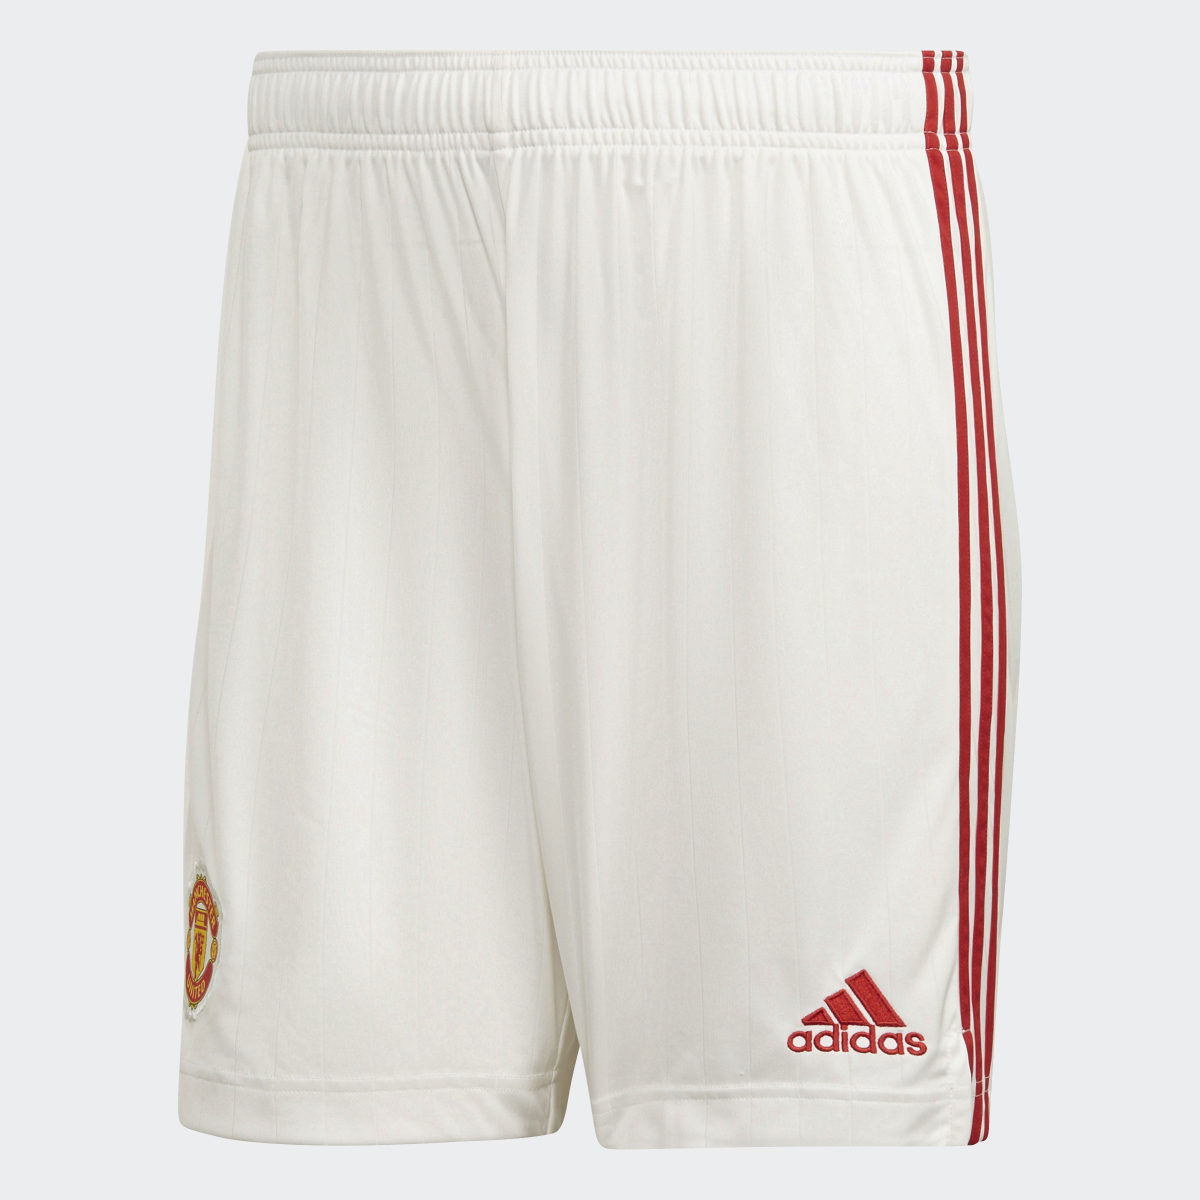 Adidas Shorts Local Manchester United 21/22. 4